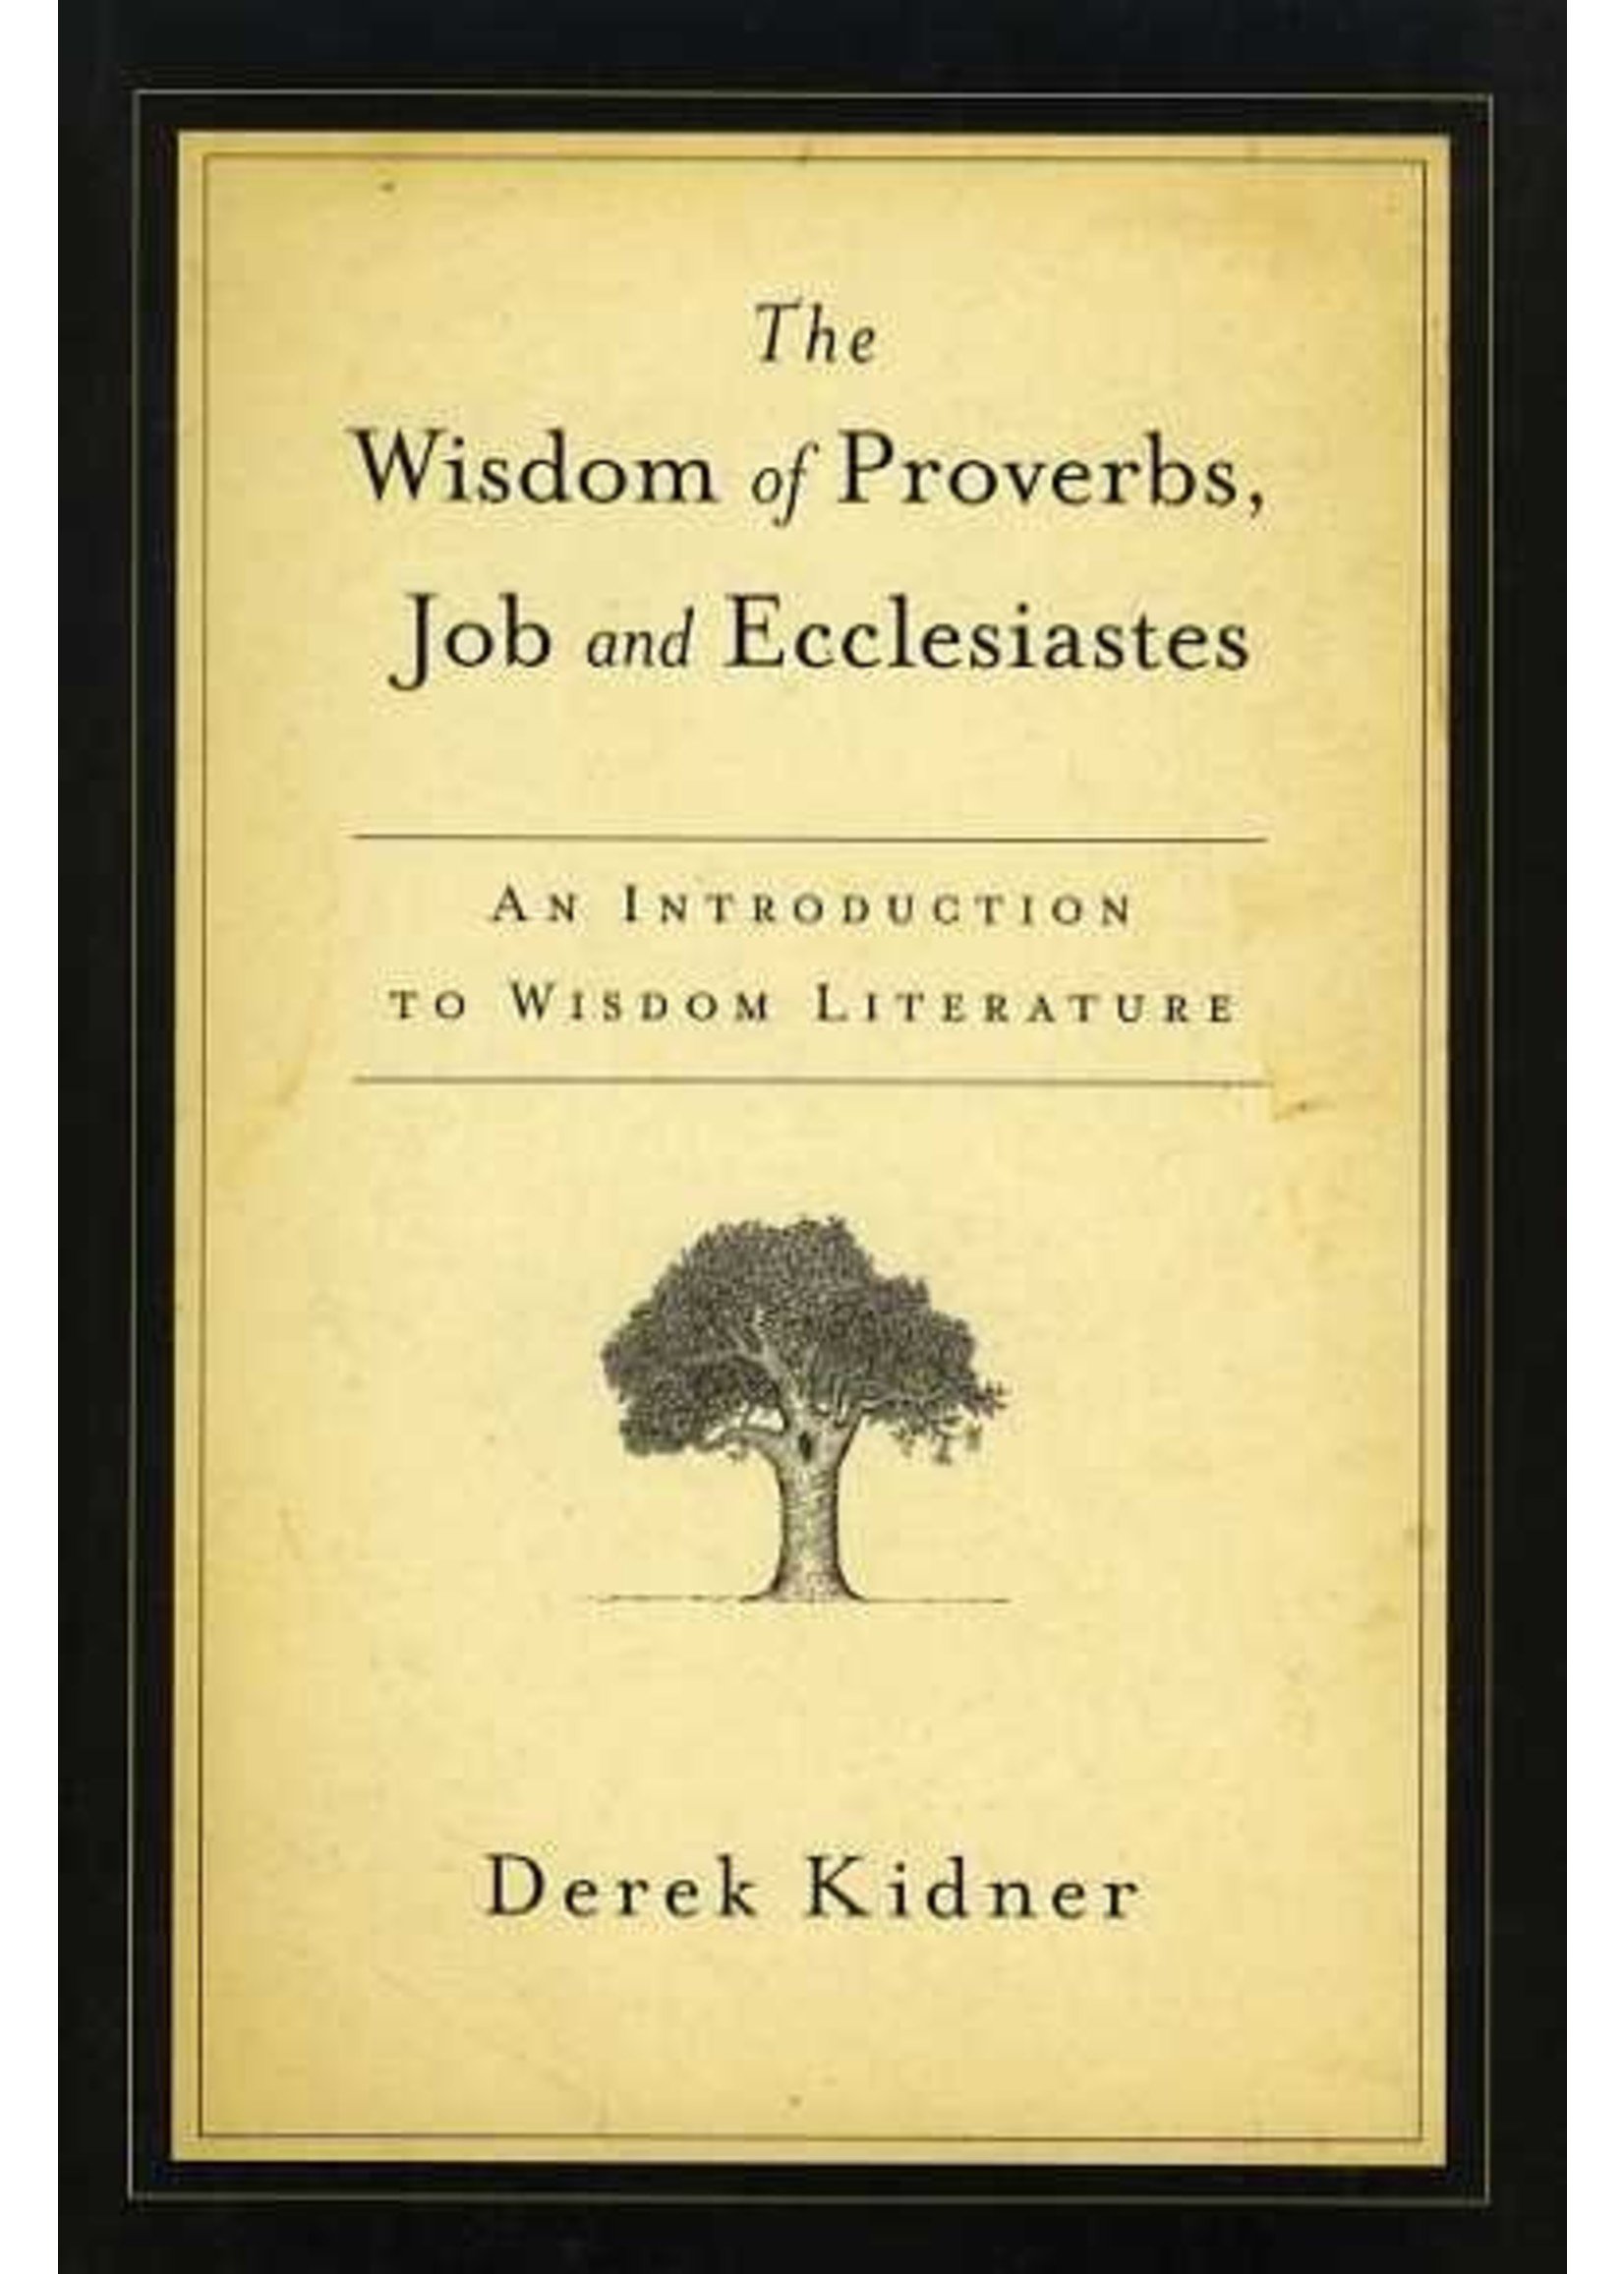 InterVarsity Press The Wisdom of Proverbs, Job, and Ecclesiastes - Derek Kidner